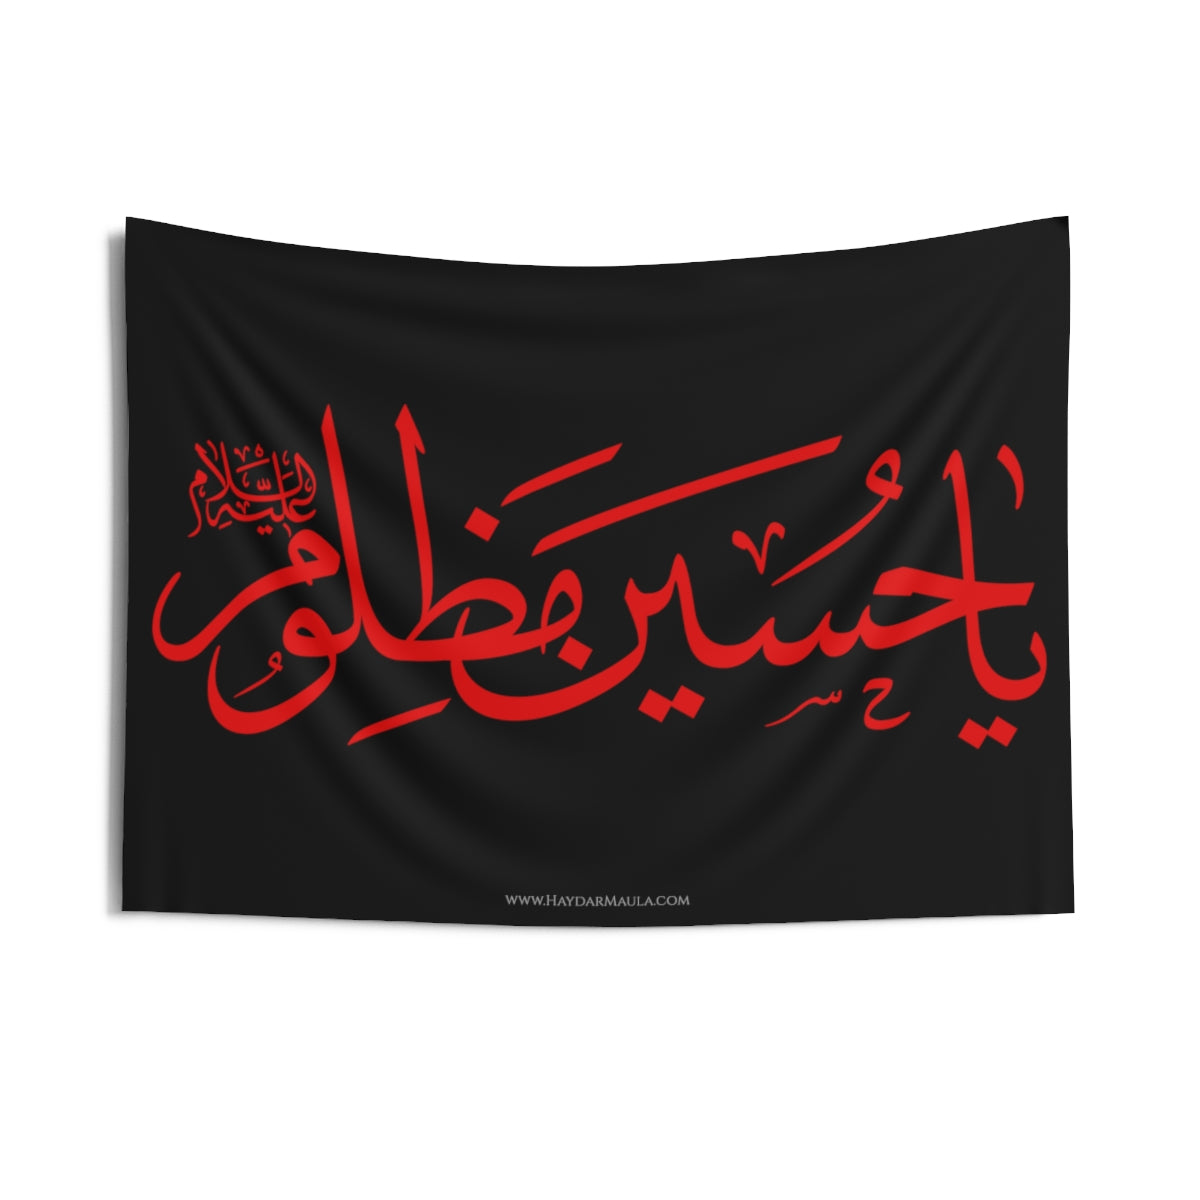 Ya Hussain (as) Madhloom - Wall Tapestry Muharram Flag, Azadari, Ashura, Karbala, Majaliss, Imam Ali, Karbala, Shia Islamic, Arbaeen